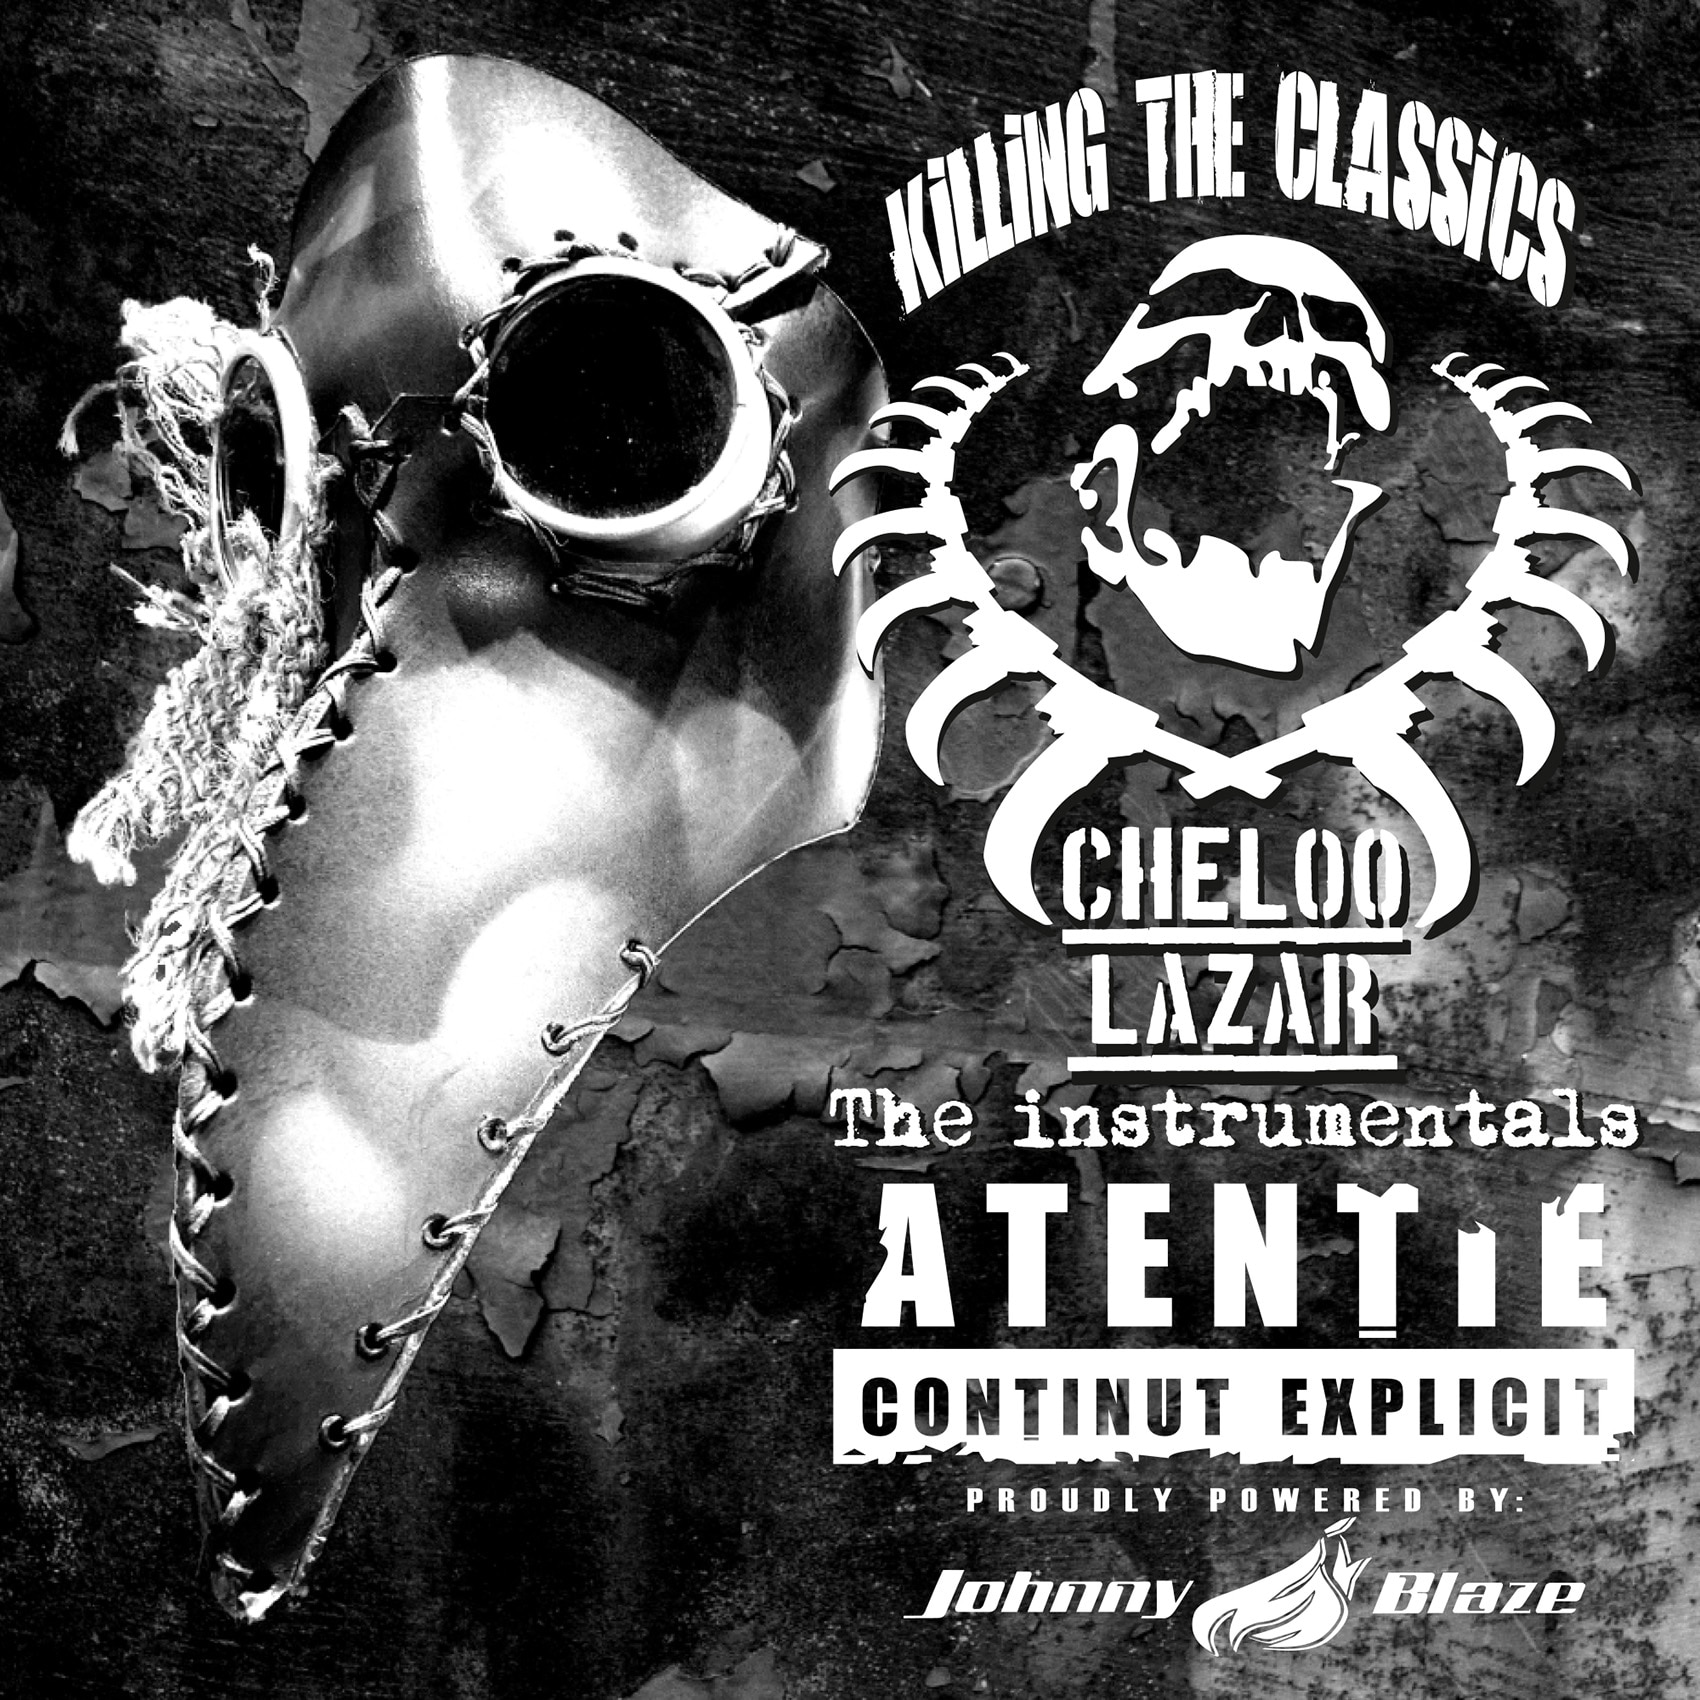 Horn lyrics lotus ChelooLazar - Killing The Classics - The Instrumentals - eMAG.ro